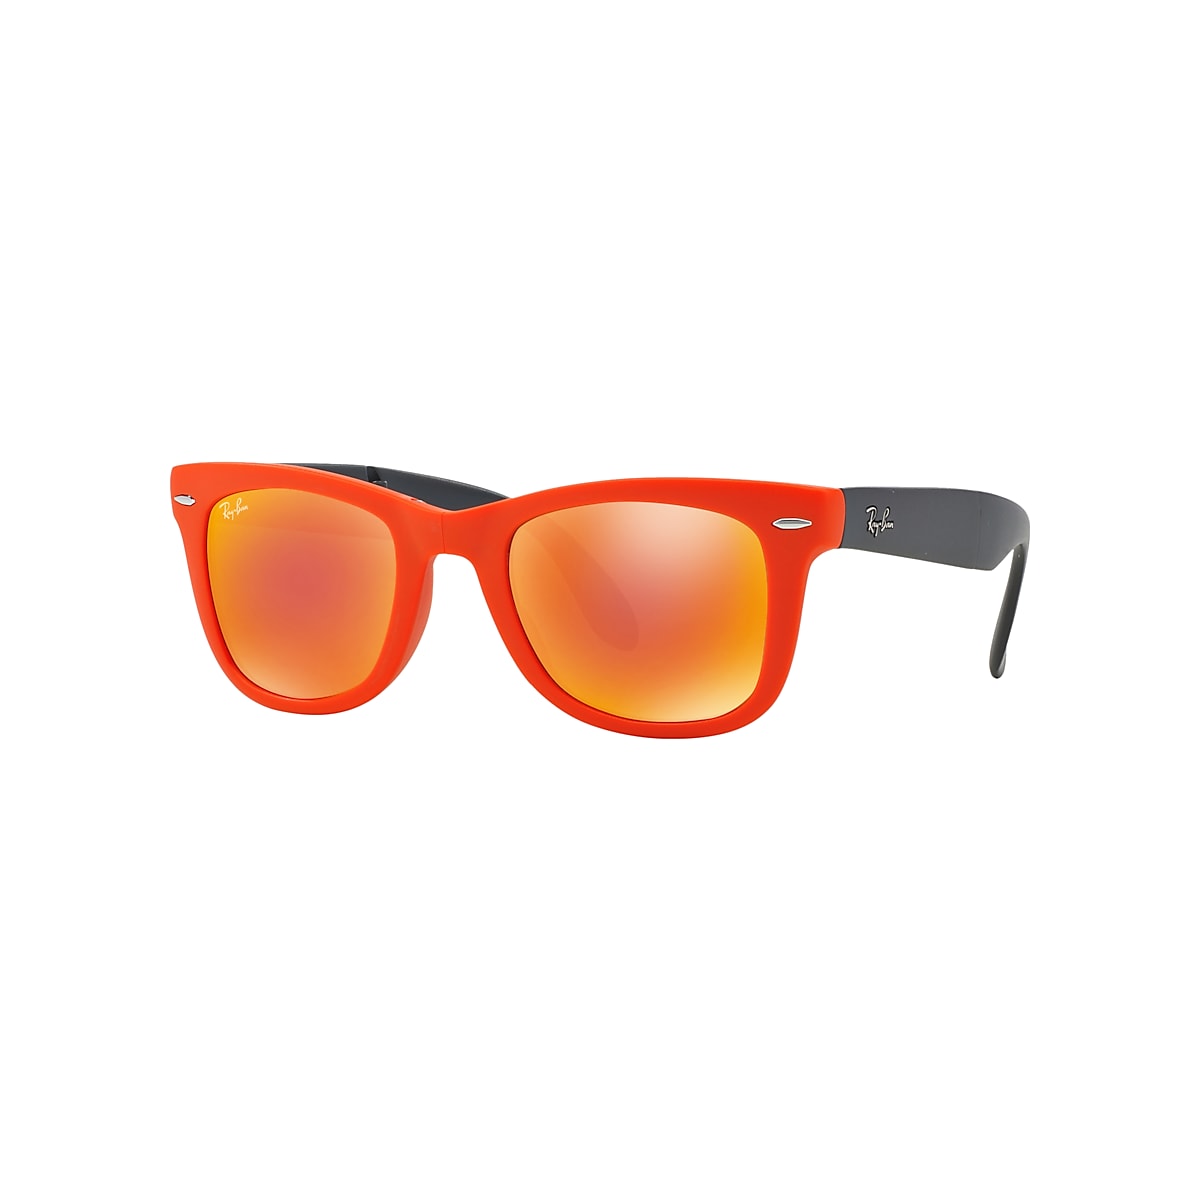 Wayfarer Folding Flash Lenses Sunglasses in Orange and Orange | Ray-Ban®